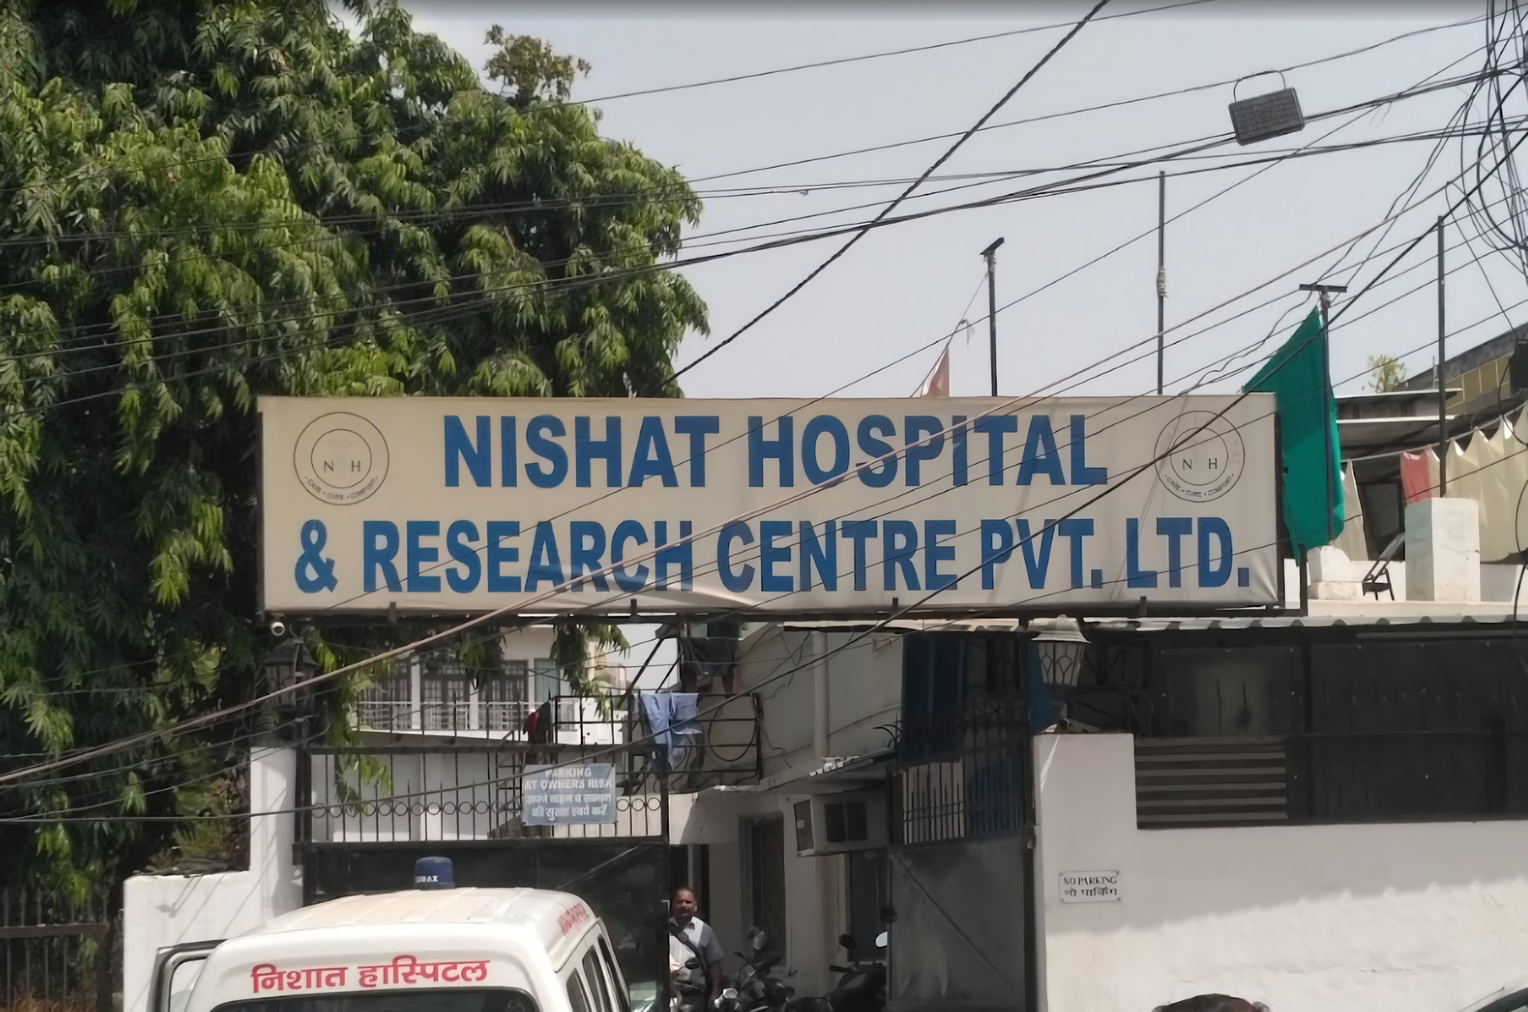 Nishat Hospital